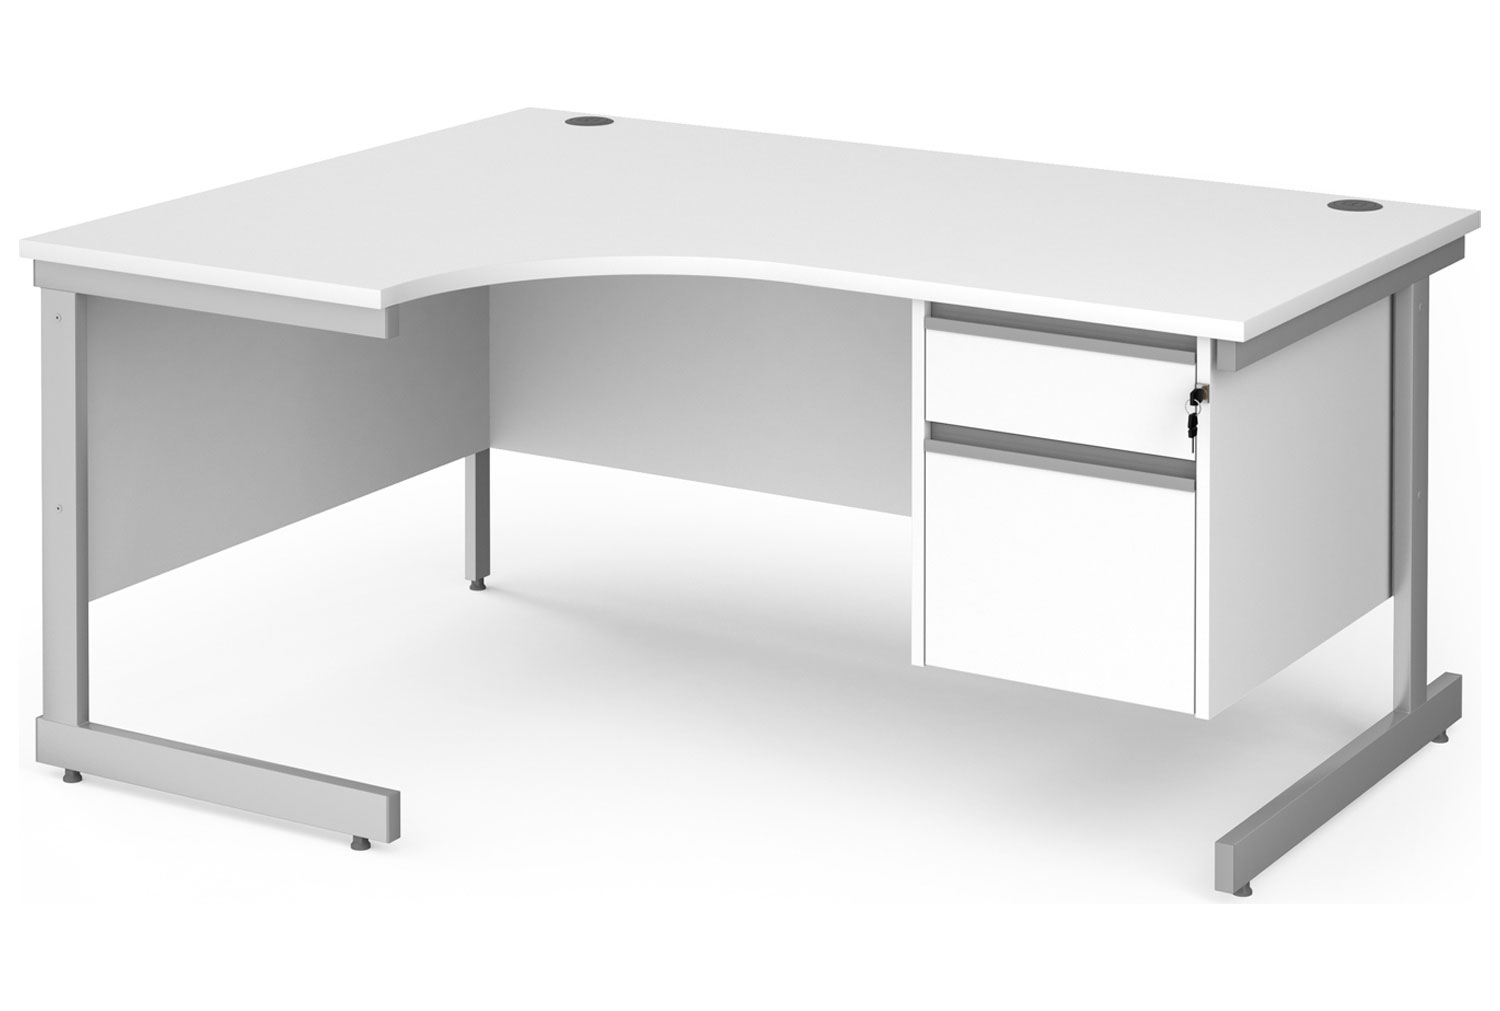 Value Line Classic+ C-Leg Left Ergo Office Desk 2 Drawers (Silver Leg), 160wx120/80dx73h (cm), White